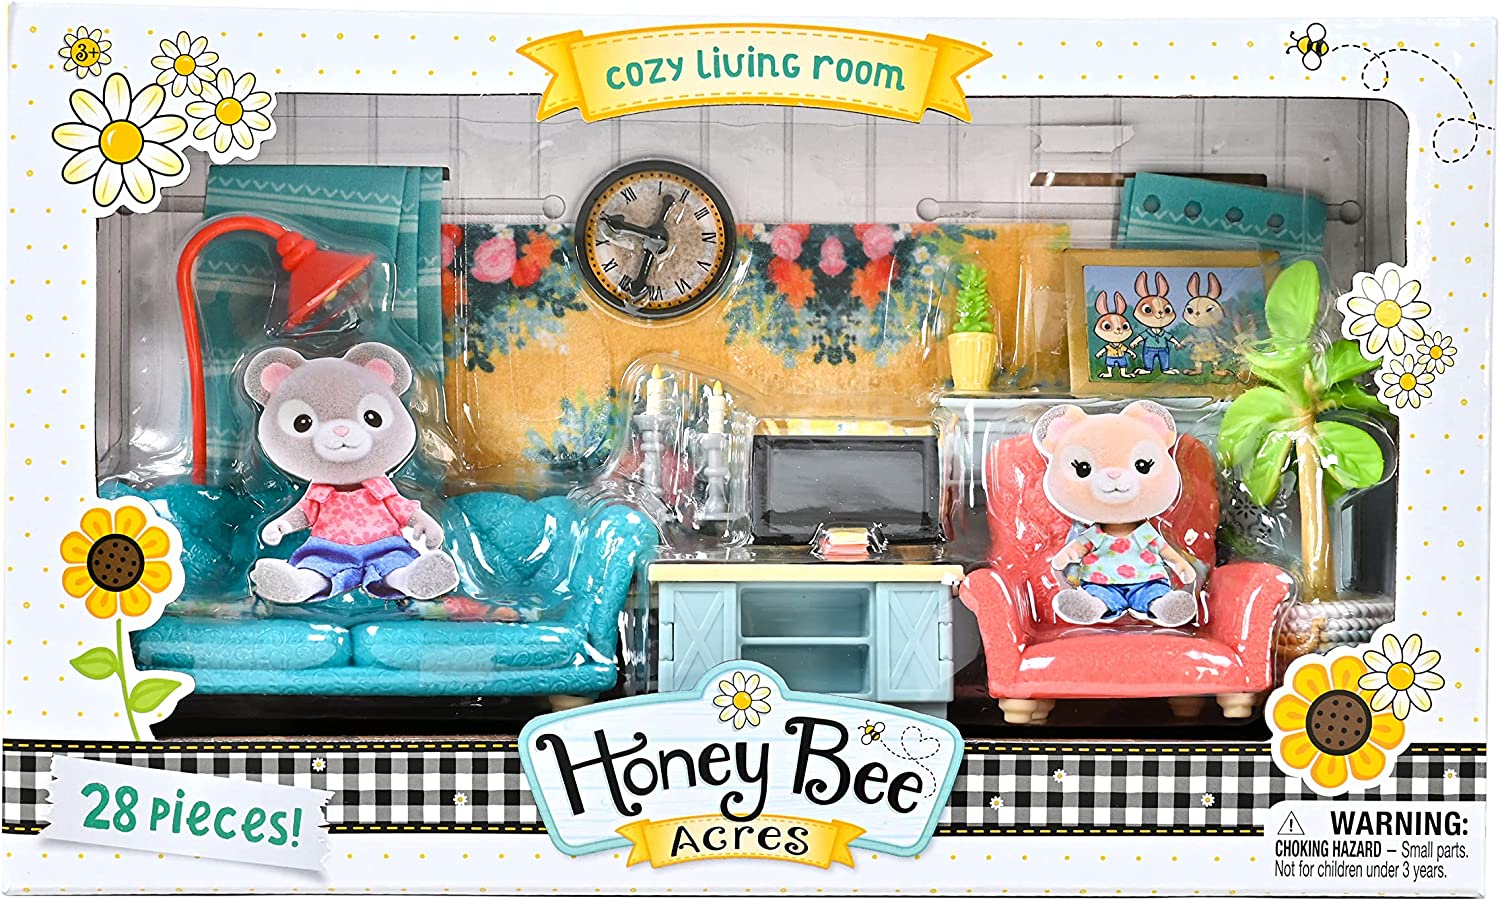 HONEY BEES ACRES LIVING ROOM DECOR ACCESSORIES